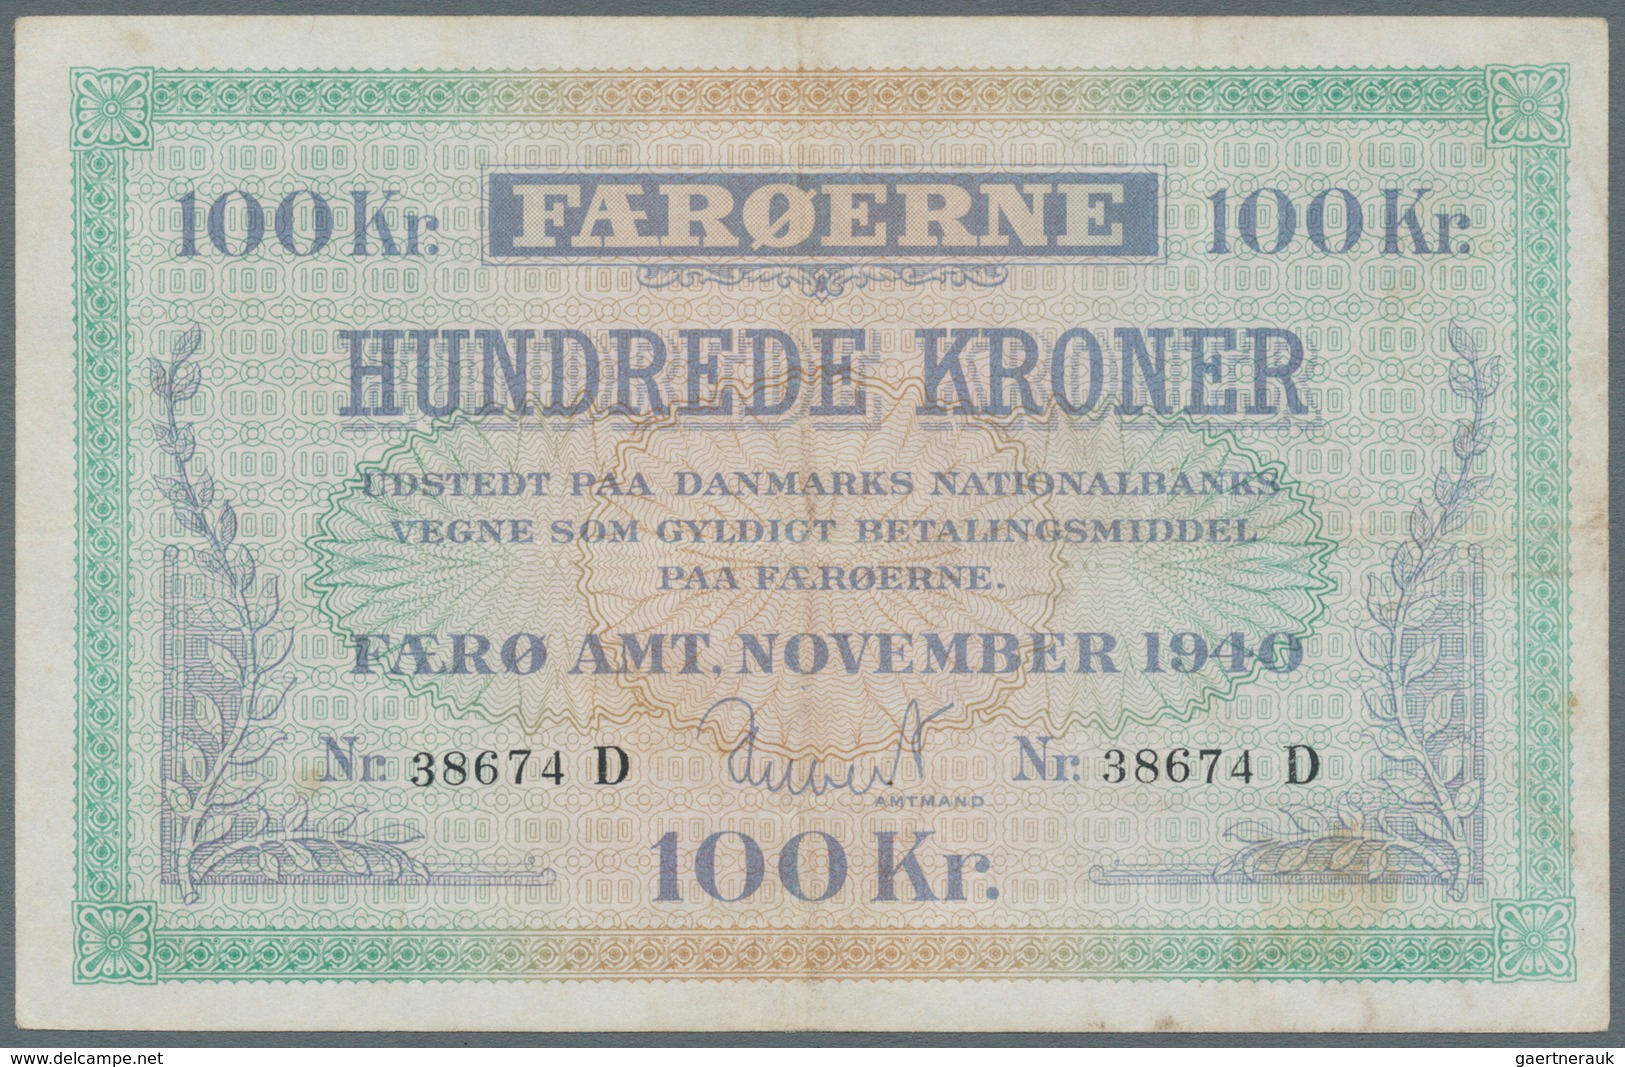 Faeroe Islands / Färöer: 100 Kroner 1940 P. 12, Rare High Denomination Banknote Of This Series, Ligh - Islas Faeroes